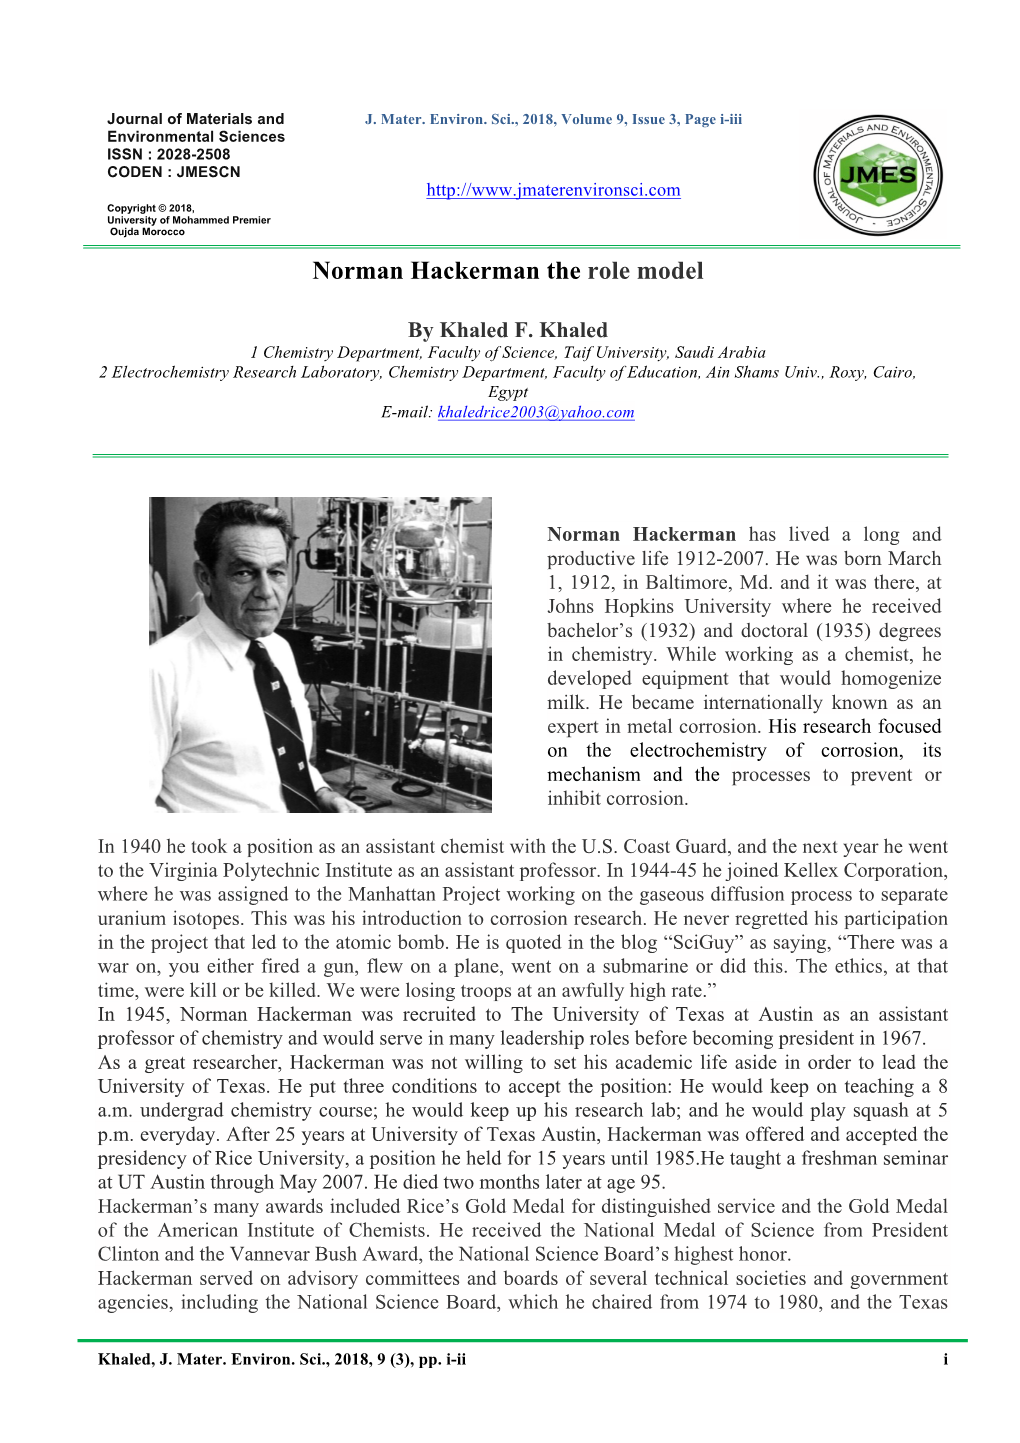 Norman Hackerman the Role Model by Khaled F. Khaled, J. Mater. Environ